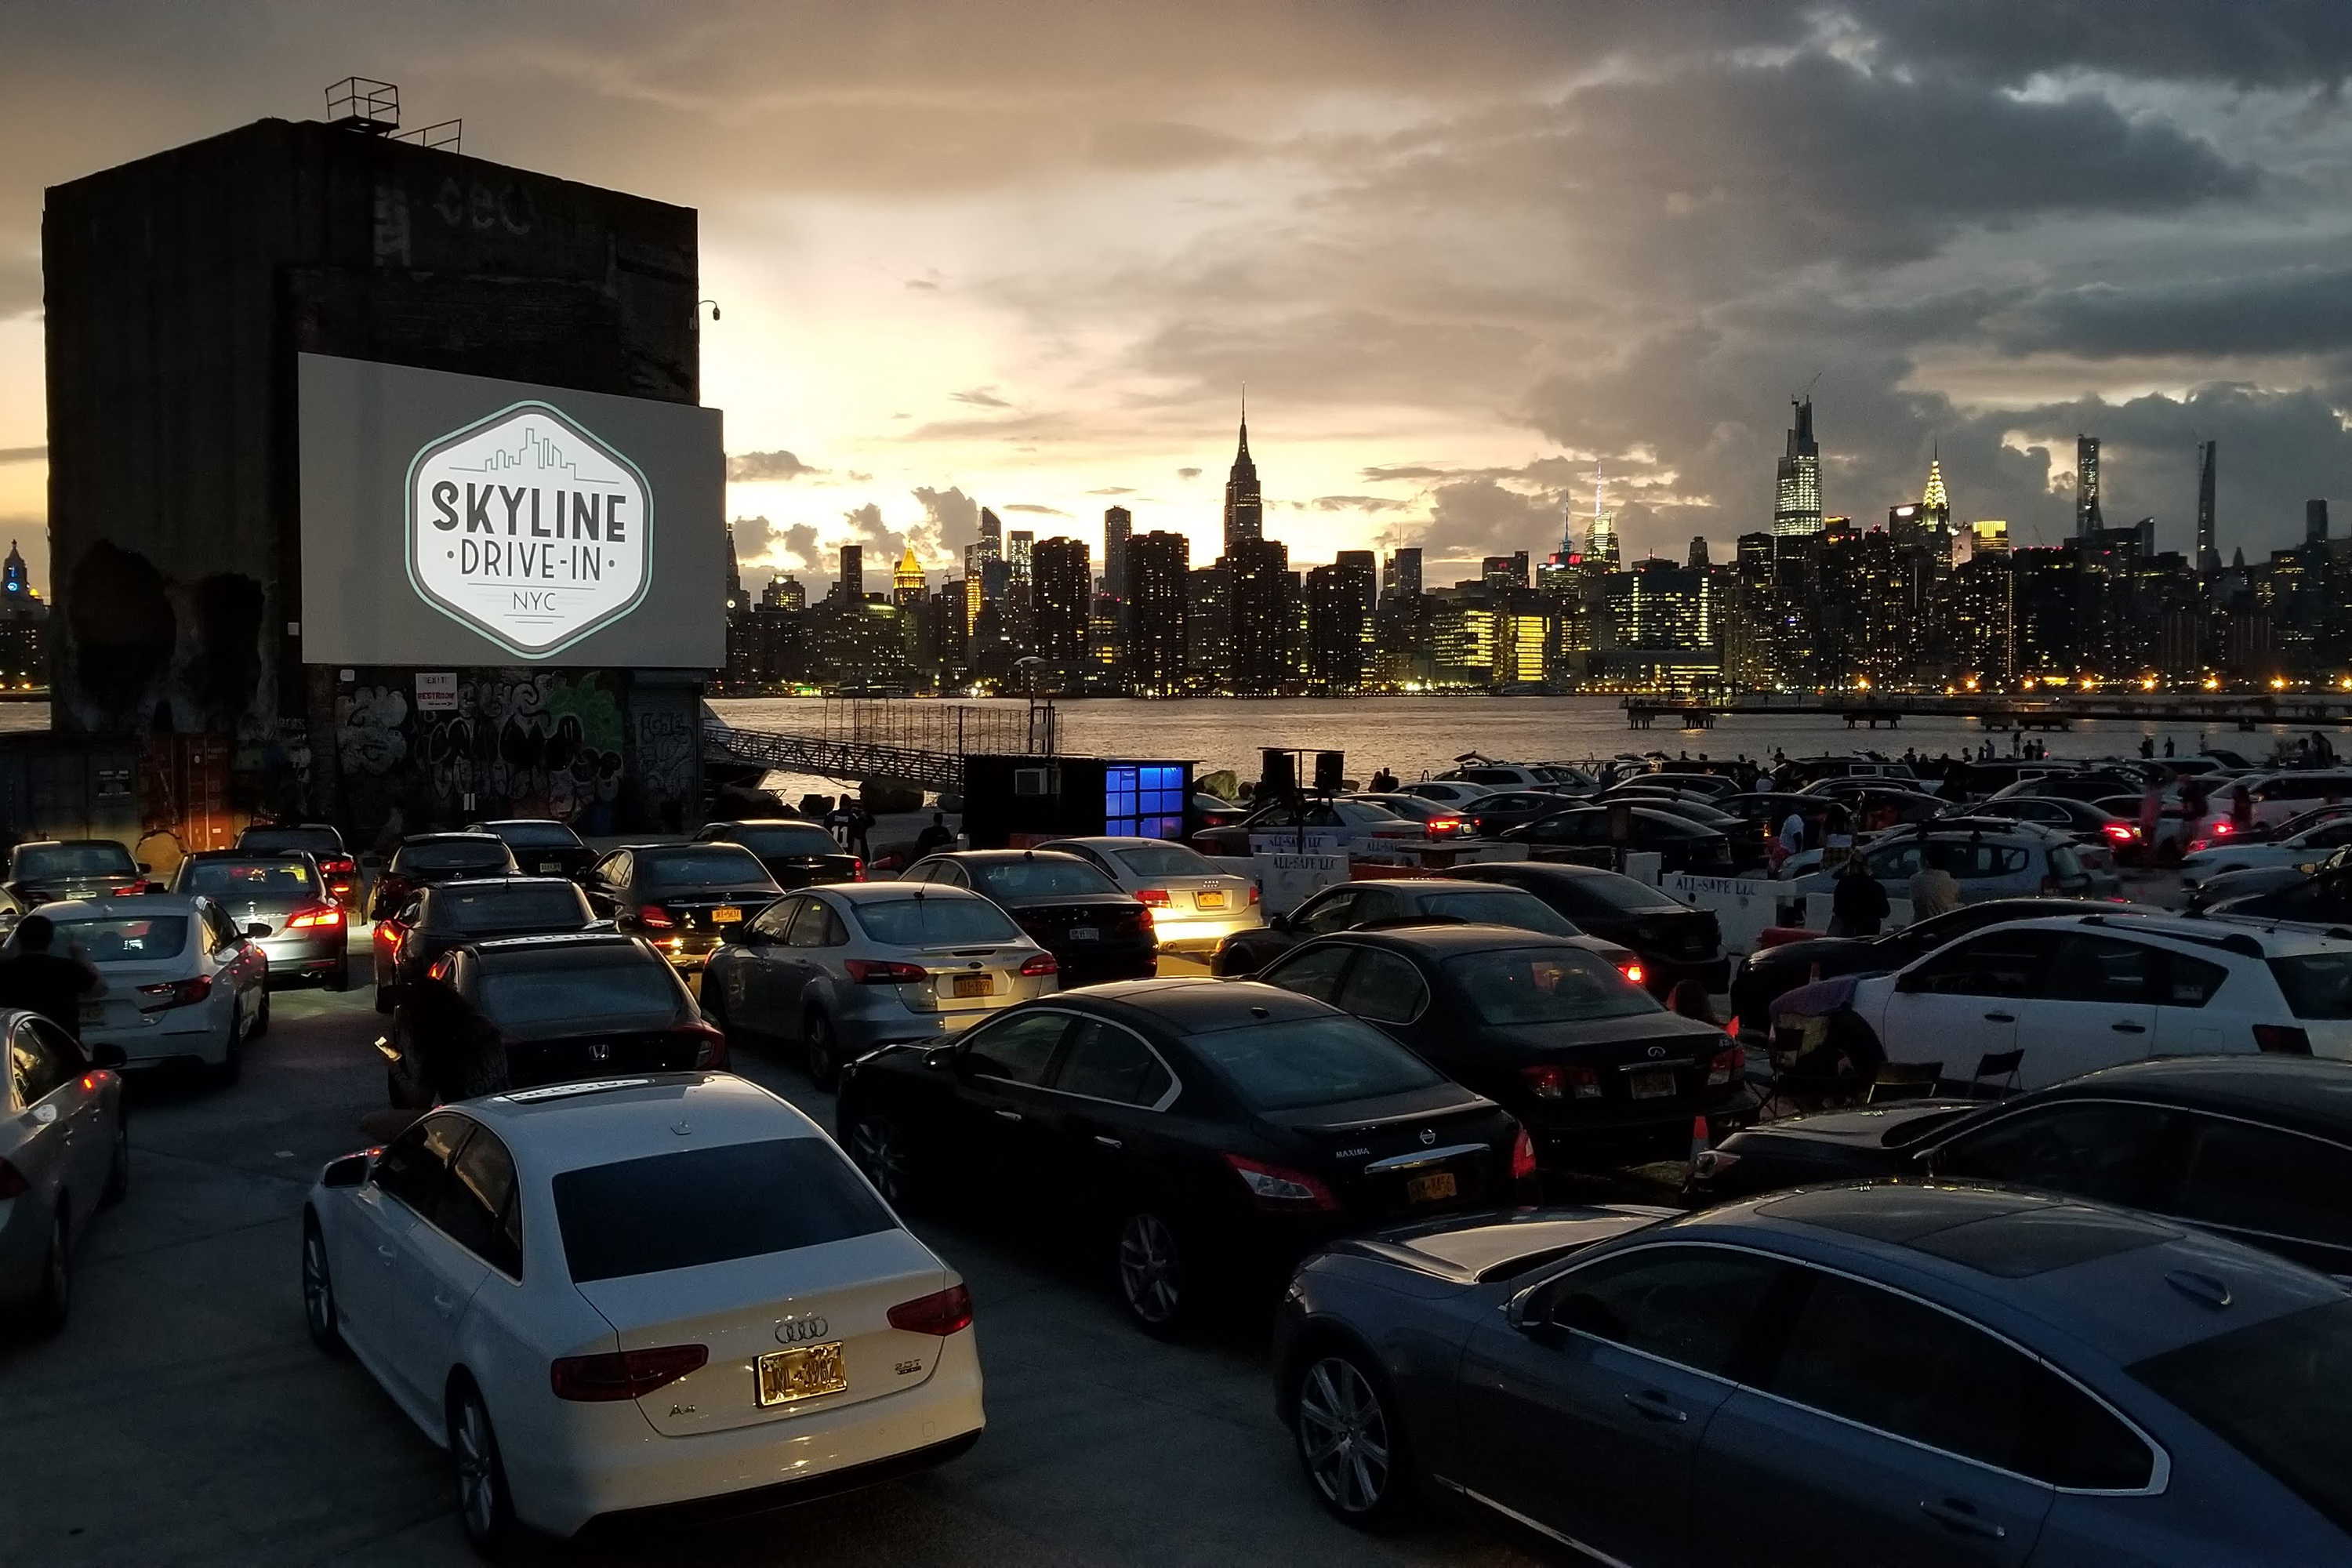 Courtesy, Skyline Drive-In NYC